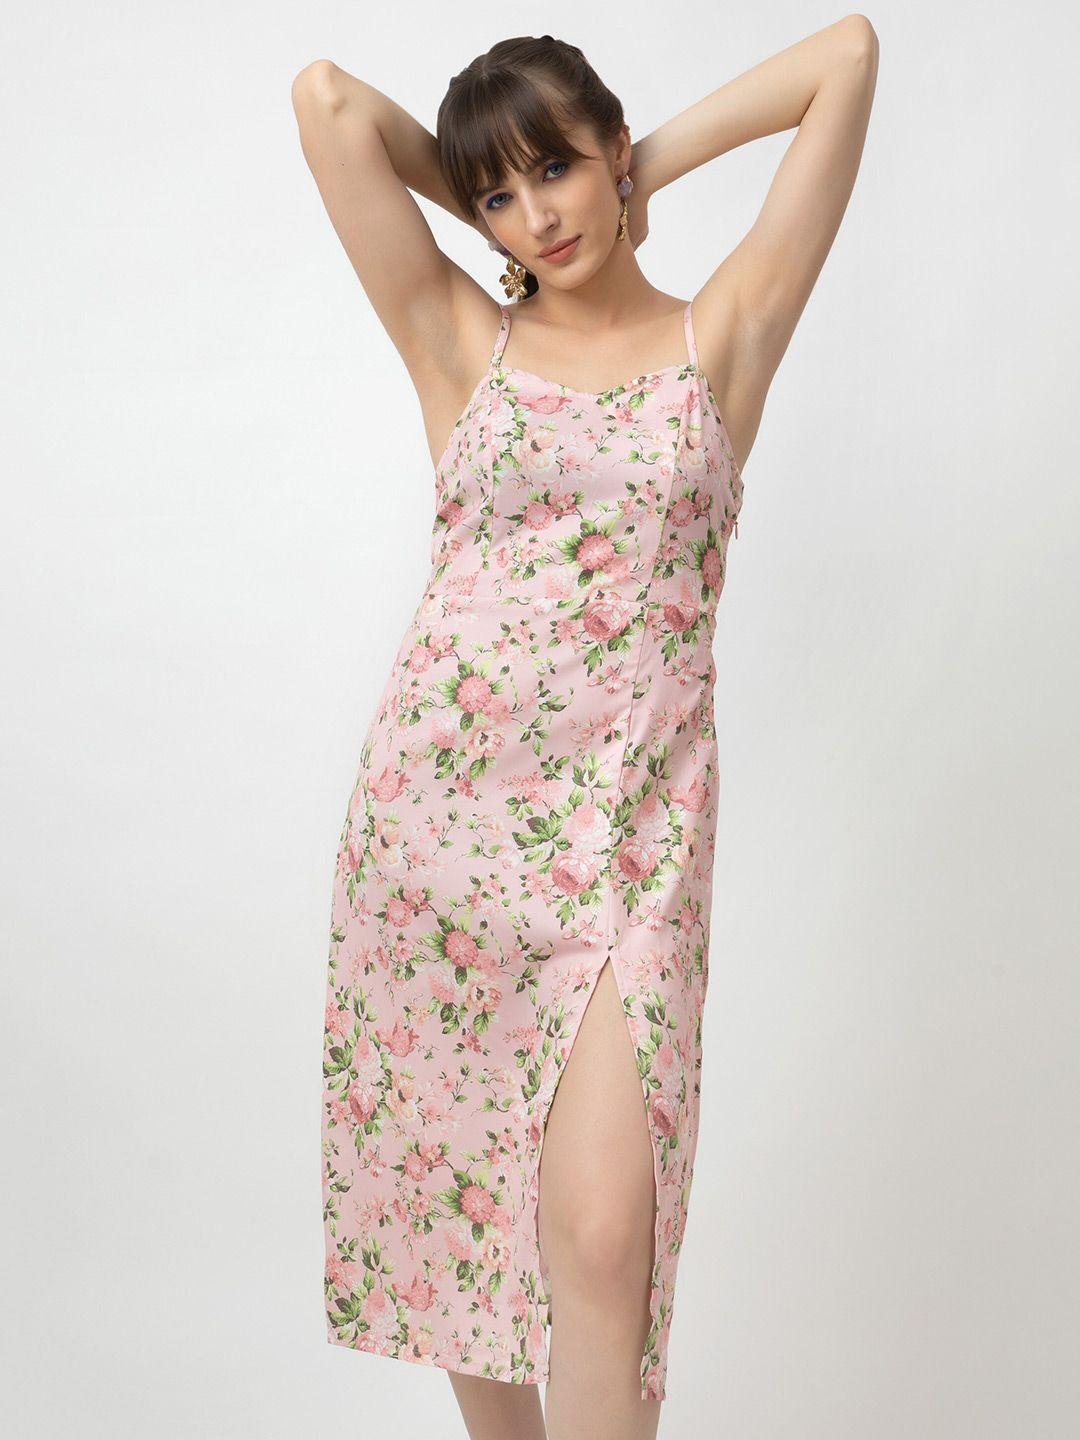 dee monash pink floral crepe sheath sleeveless dress